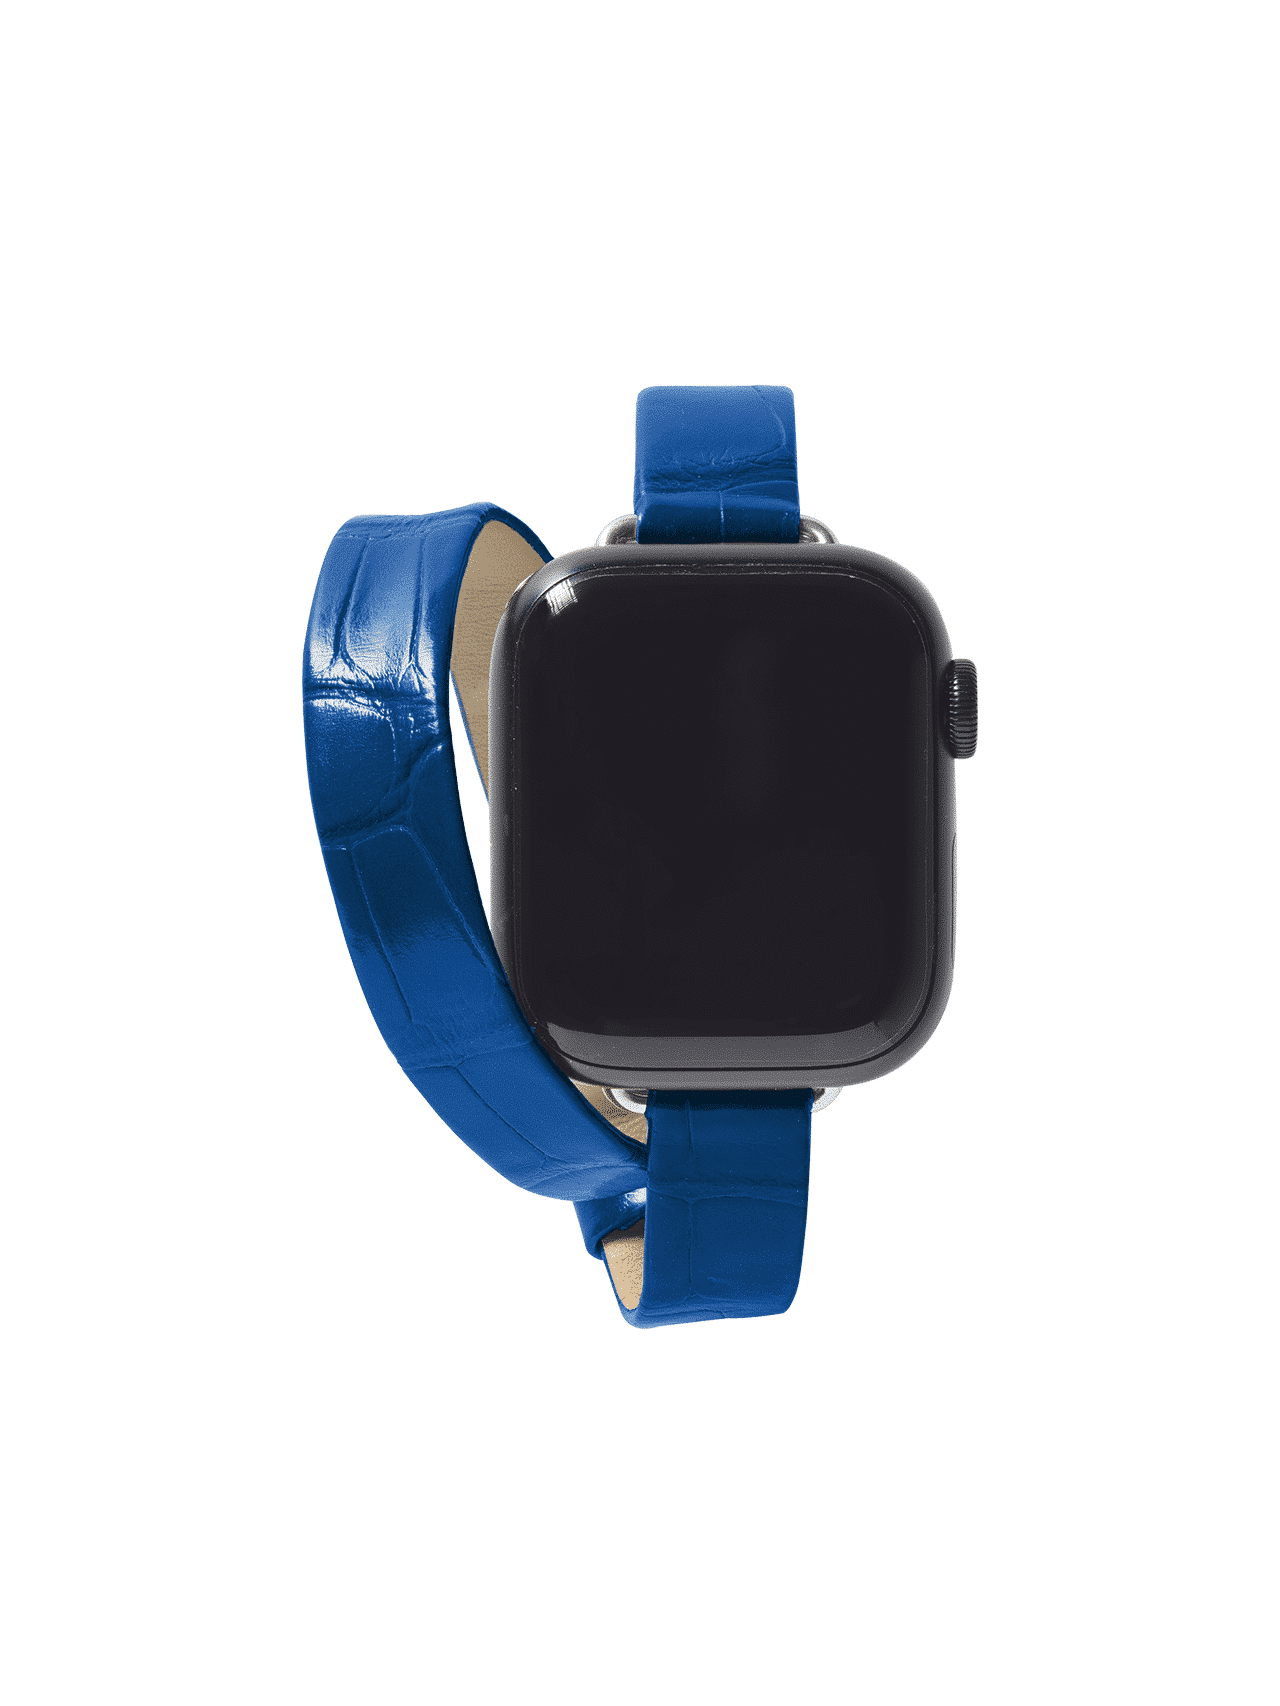 Apple Watch double bracelet Alligator Blue Bright